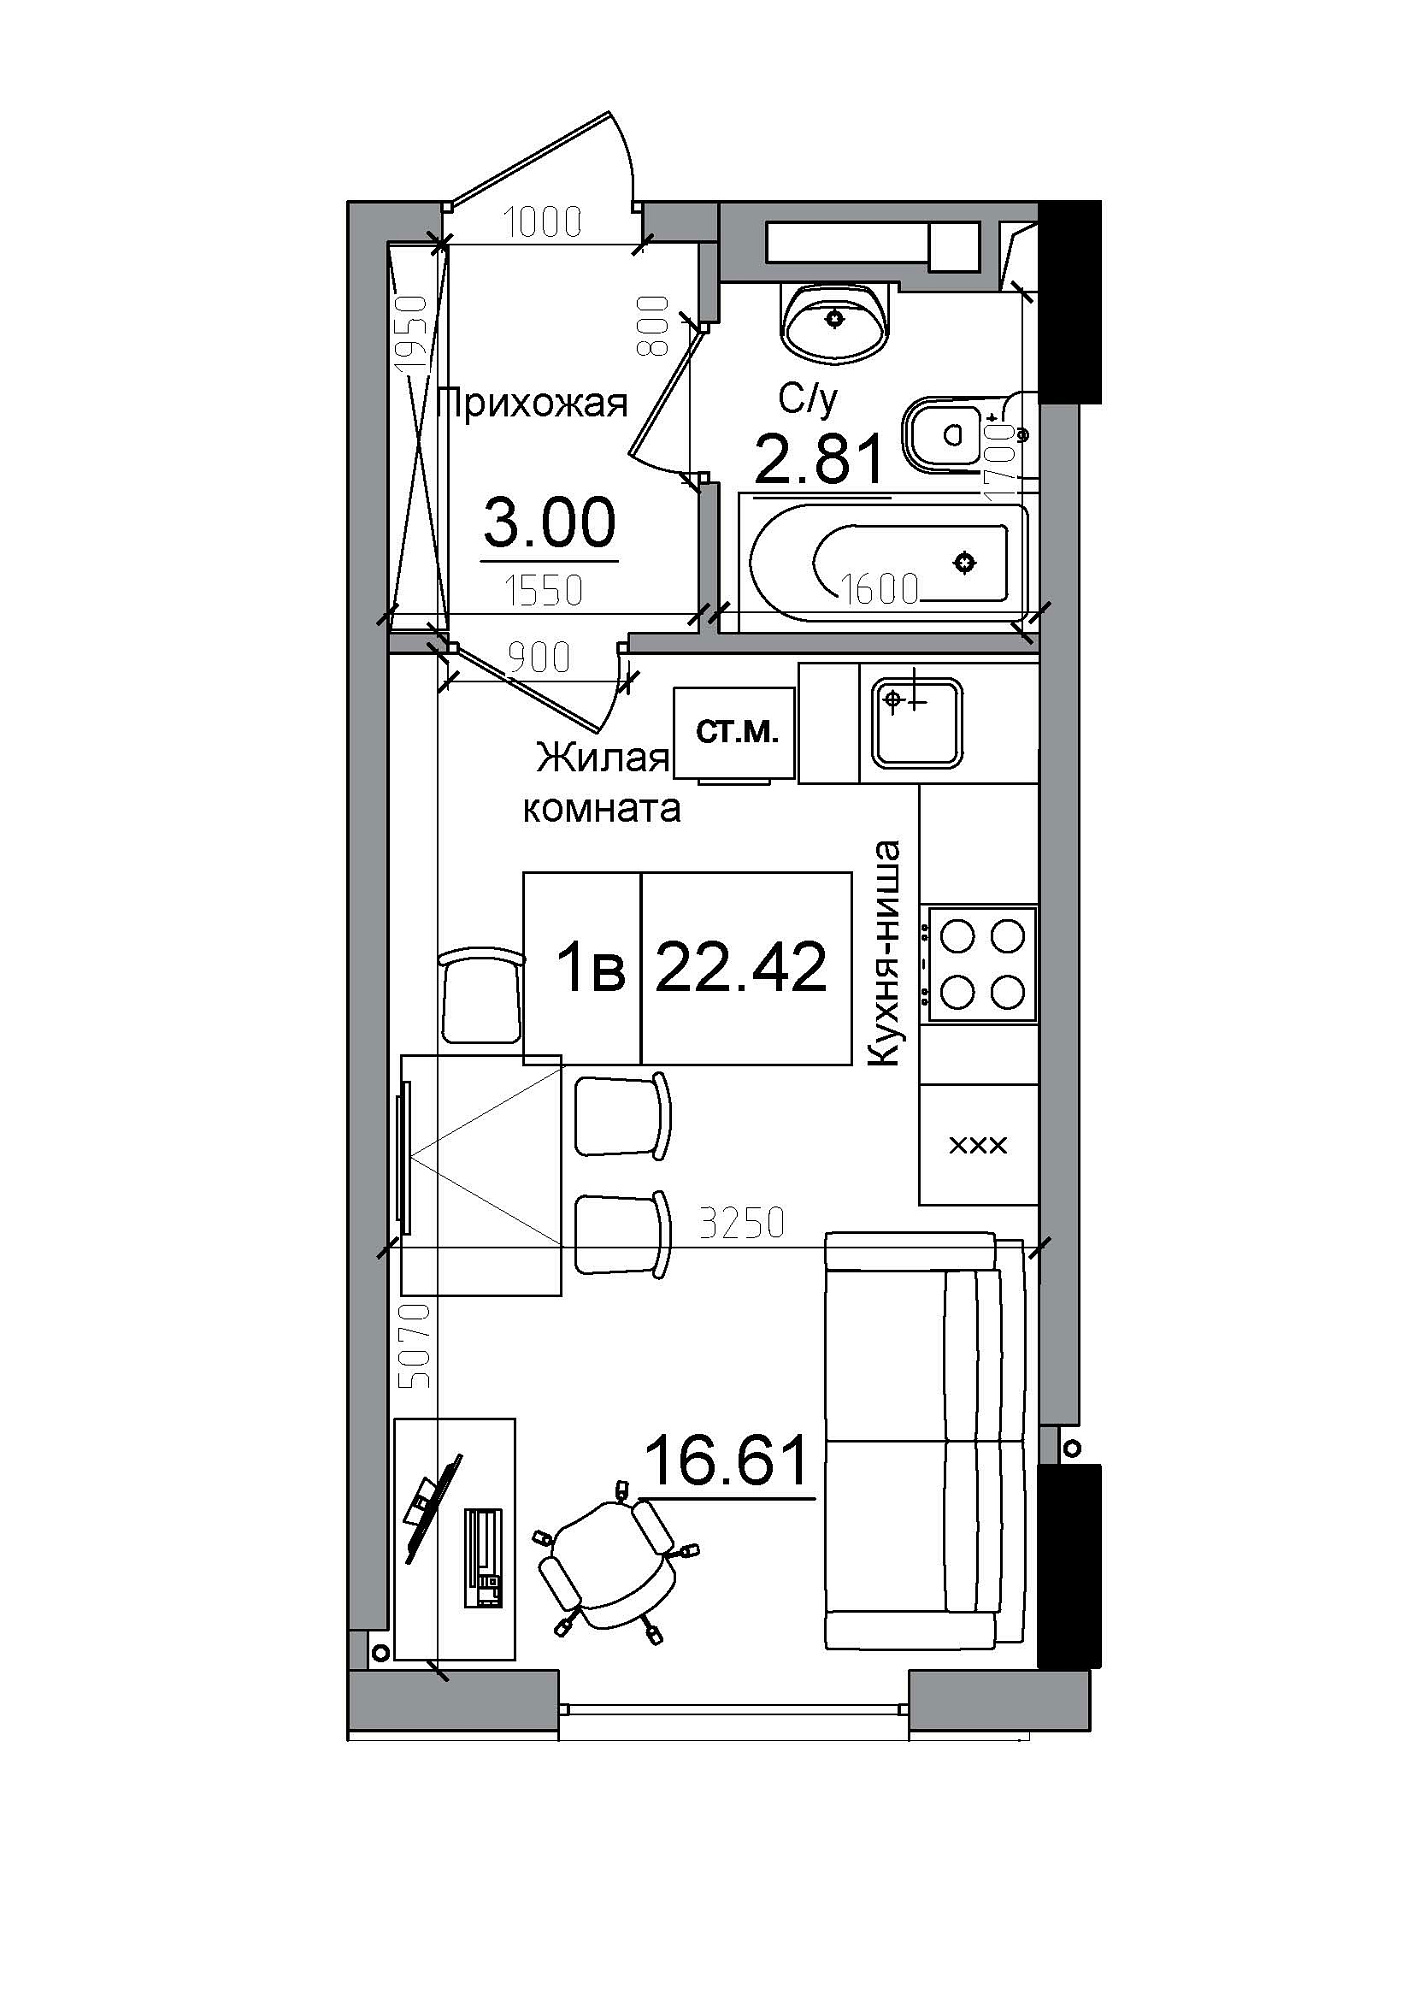 Planning Smart flats area 22.42m2, AB-12-08/00003.